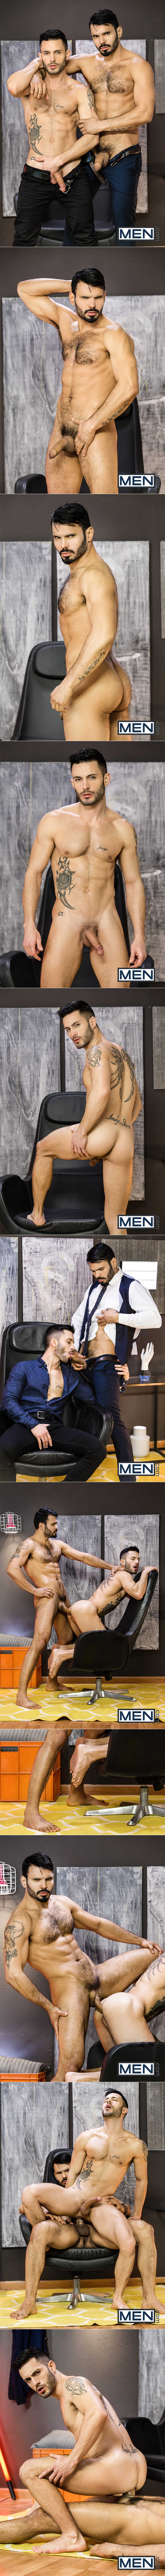 MEN The Specialist Jean Frank Fucks Andy Star Gay Condom Sex Hairy Mature Stud Tattoos Male Feet Closeup Toes Uncut Cocks Latino Man 1